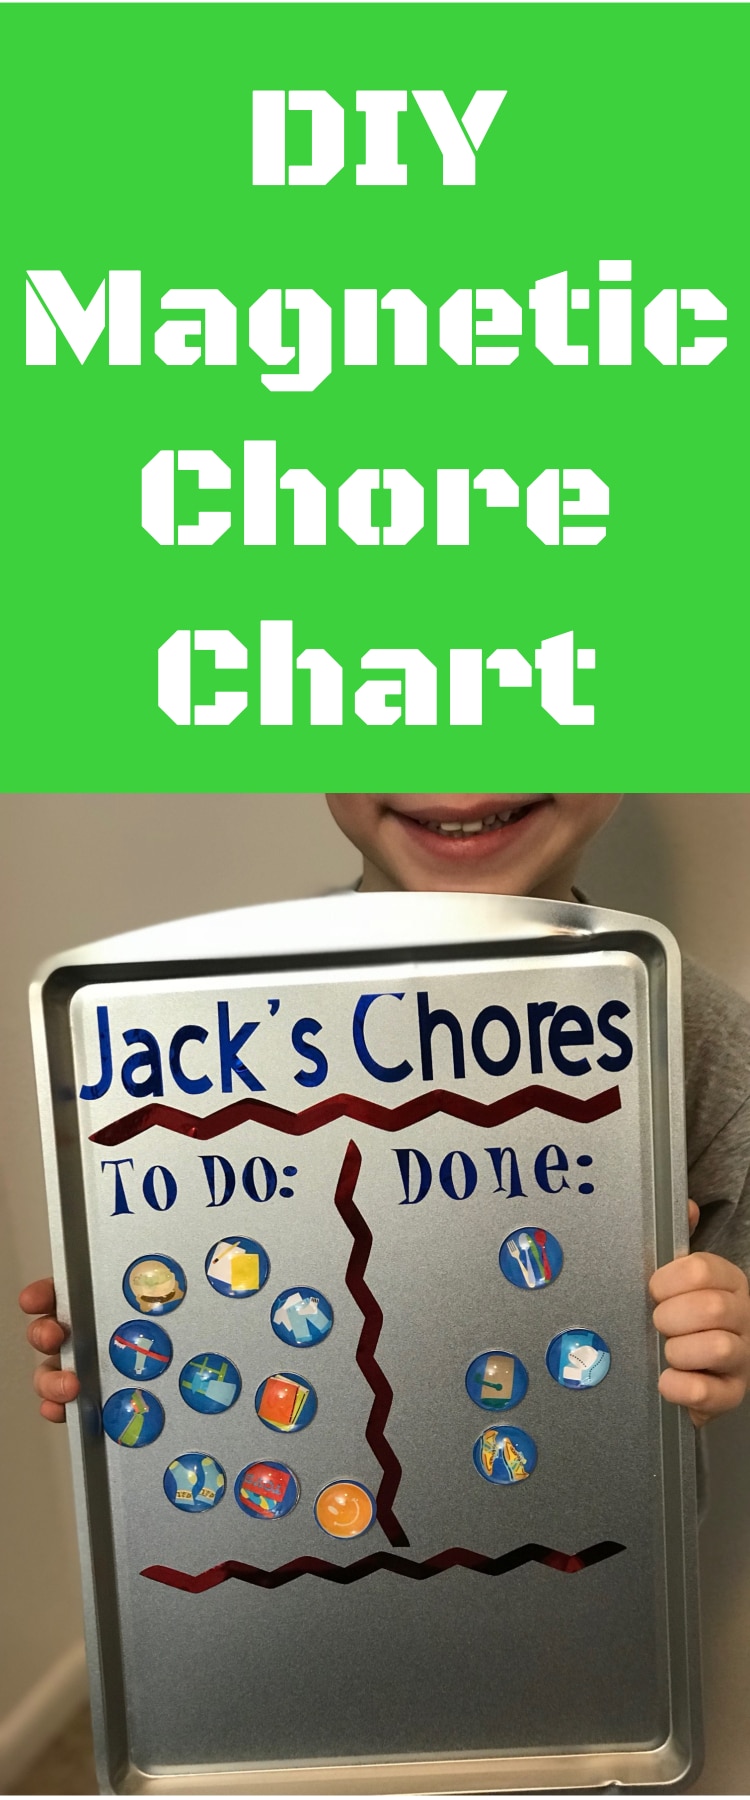 Chore Chart / DIY Chore Chart / Magnet Chore Chart / Cricut Chore Chart / Cricut Crafts #DIY #CricutMaker #CricutExploreAir